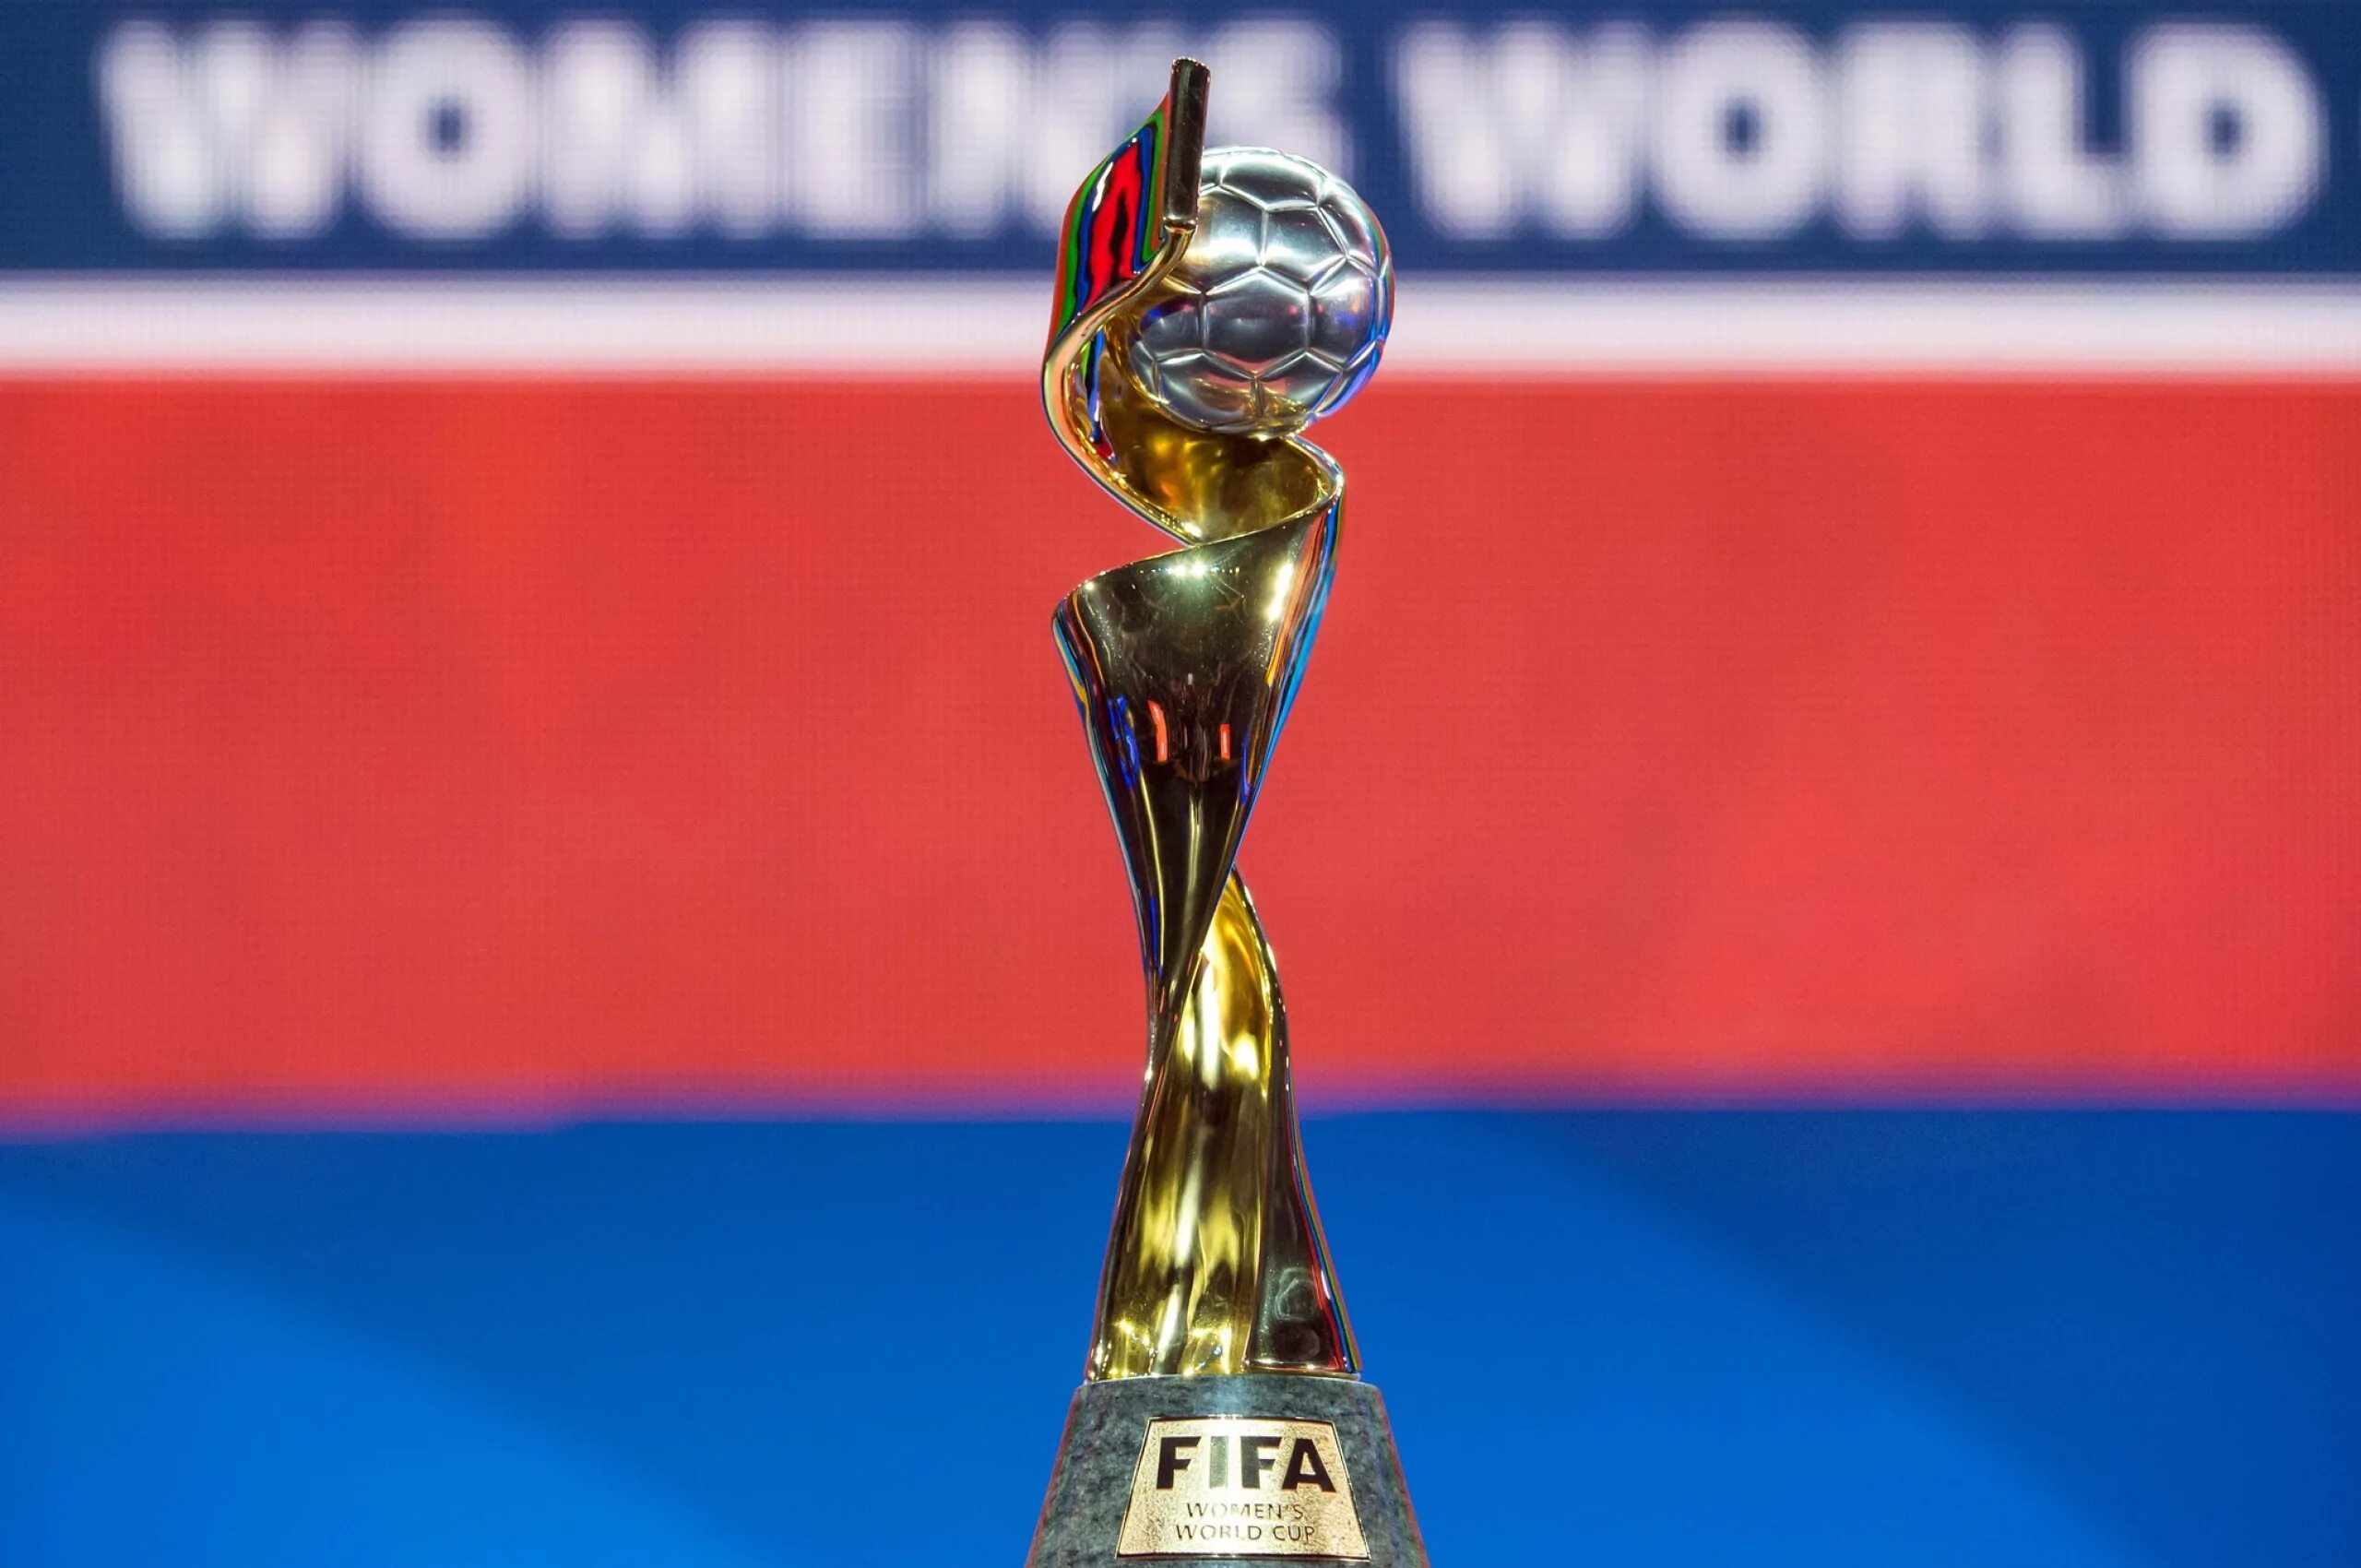 1 world cup. FIFA women's World Cup 2023. Кубок World Cup. Футбольные награды. Награды World Cup.